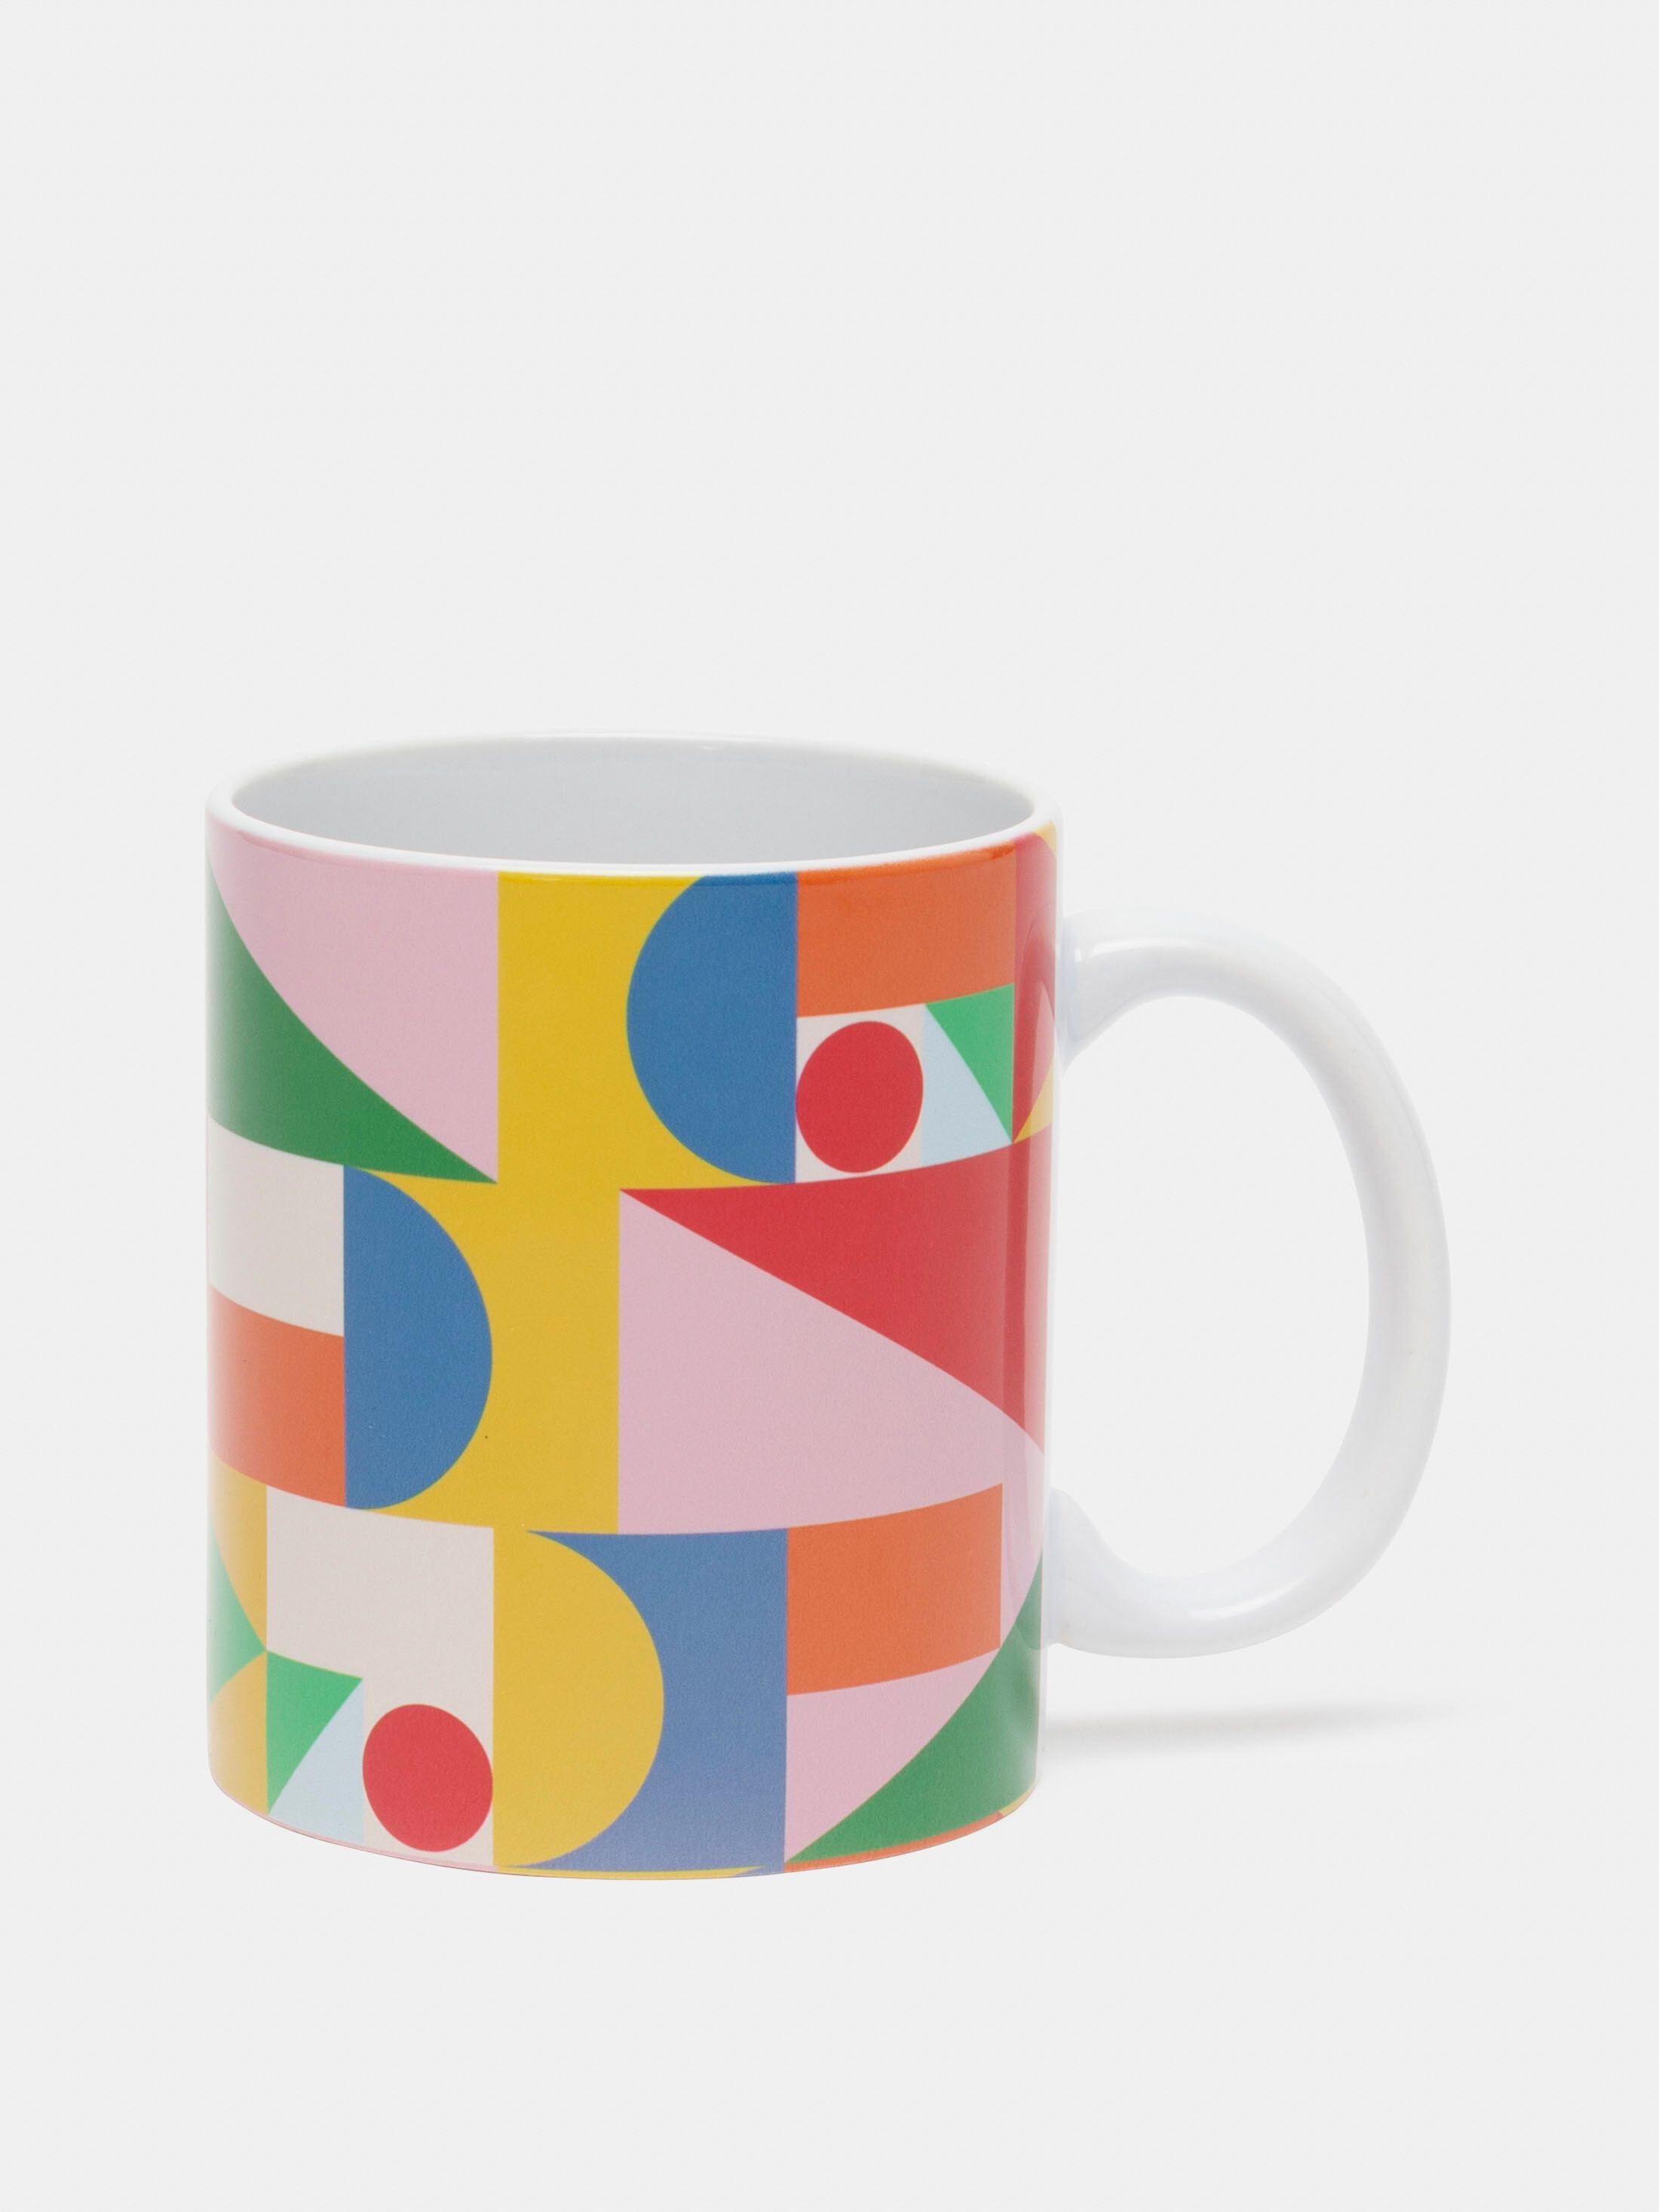 design your own mug with original drawings